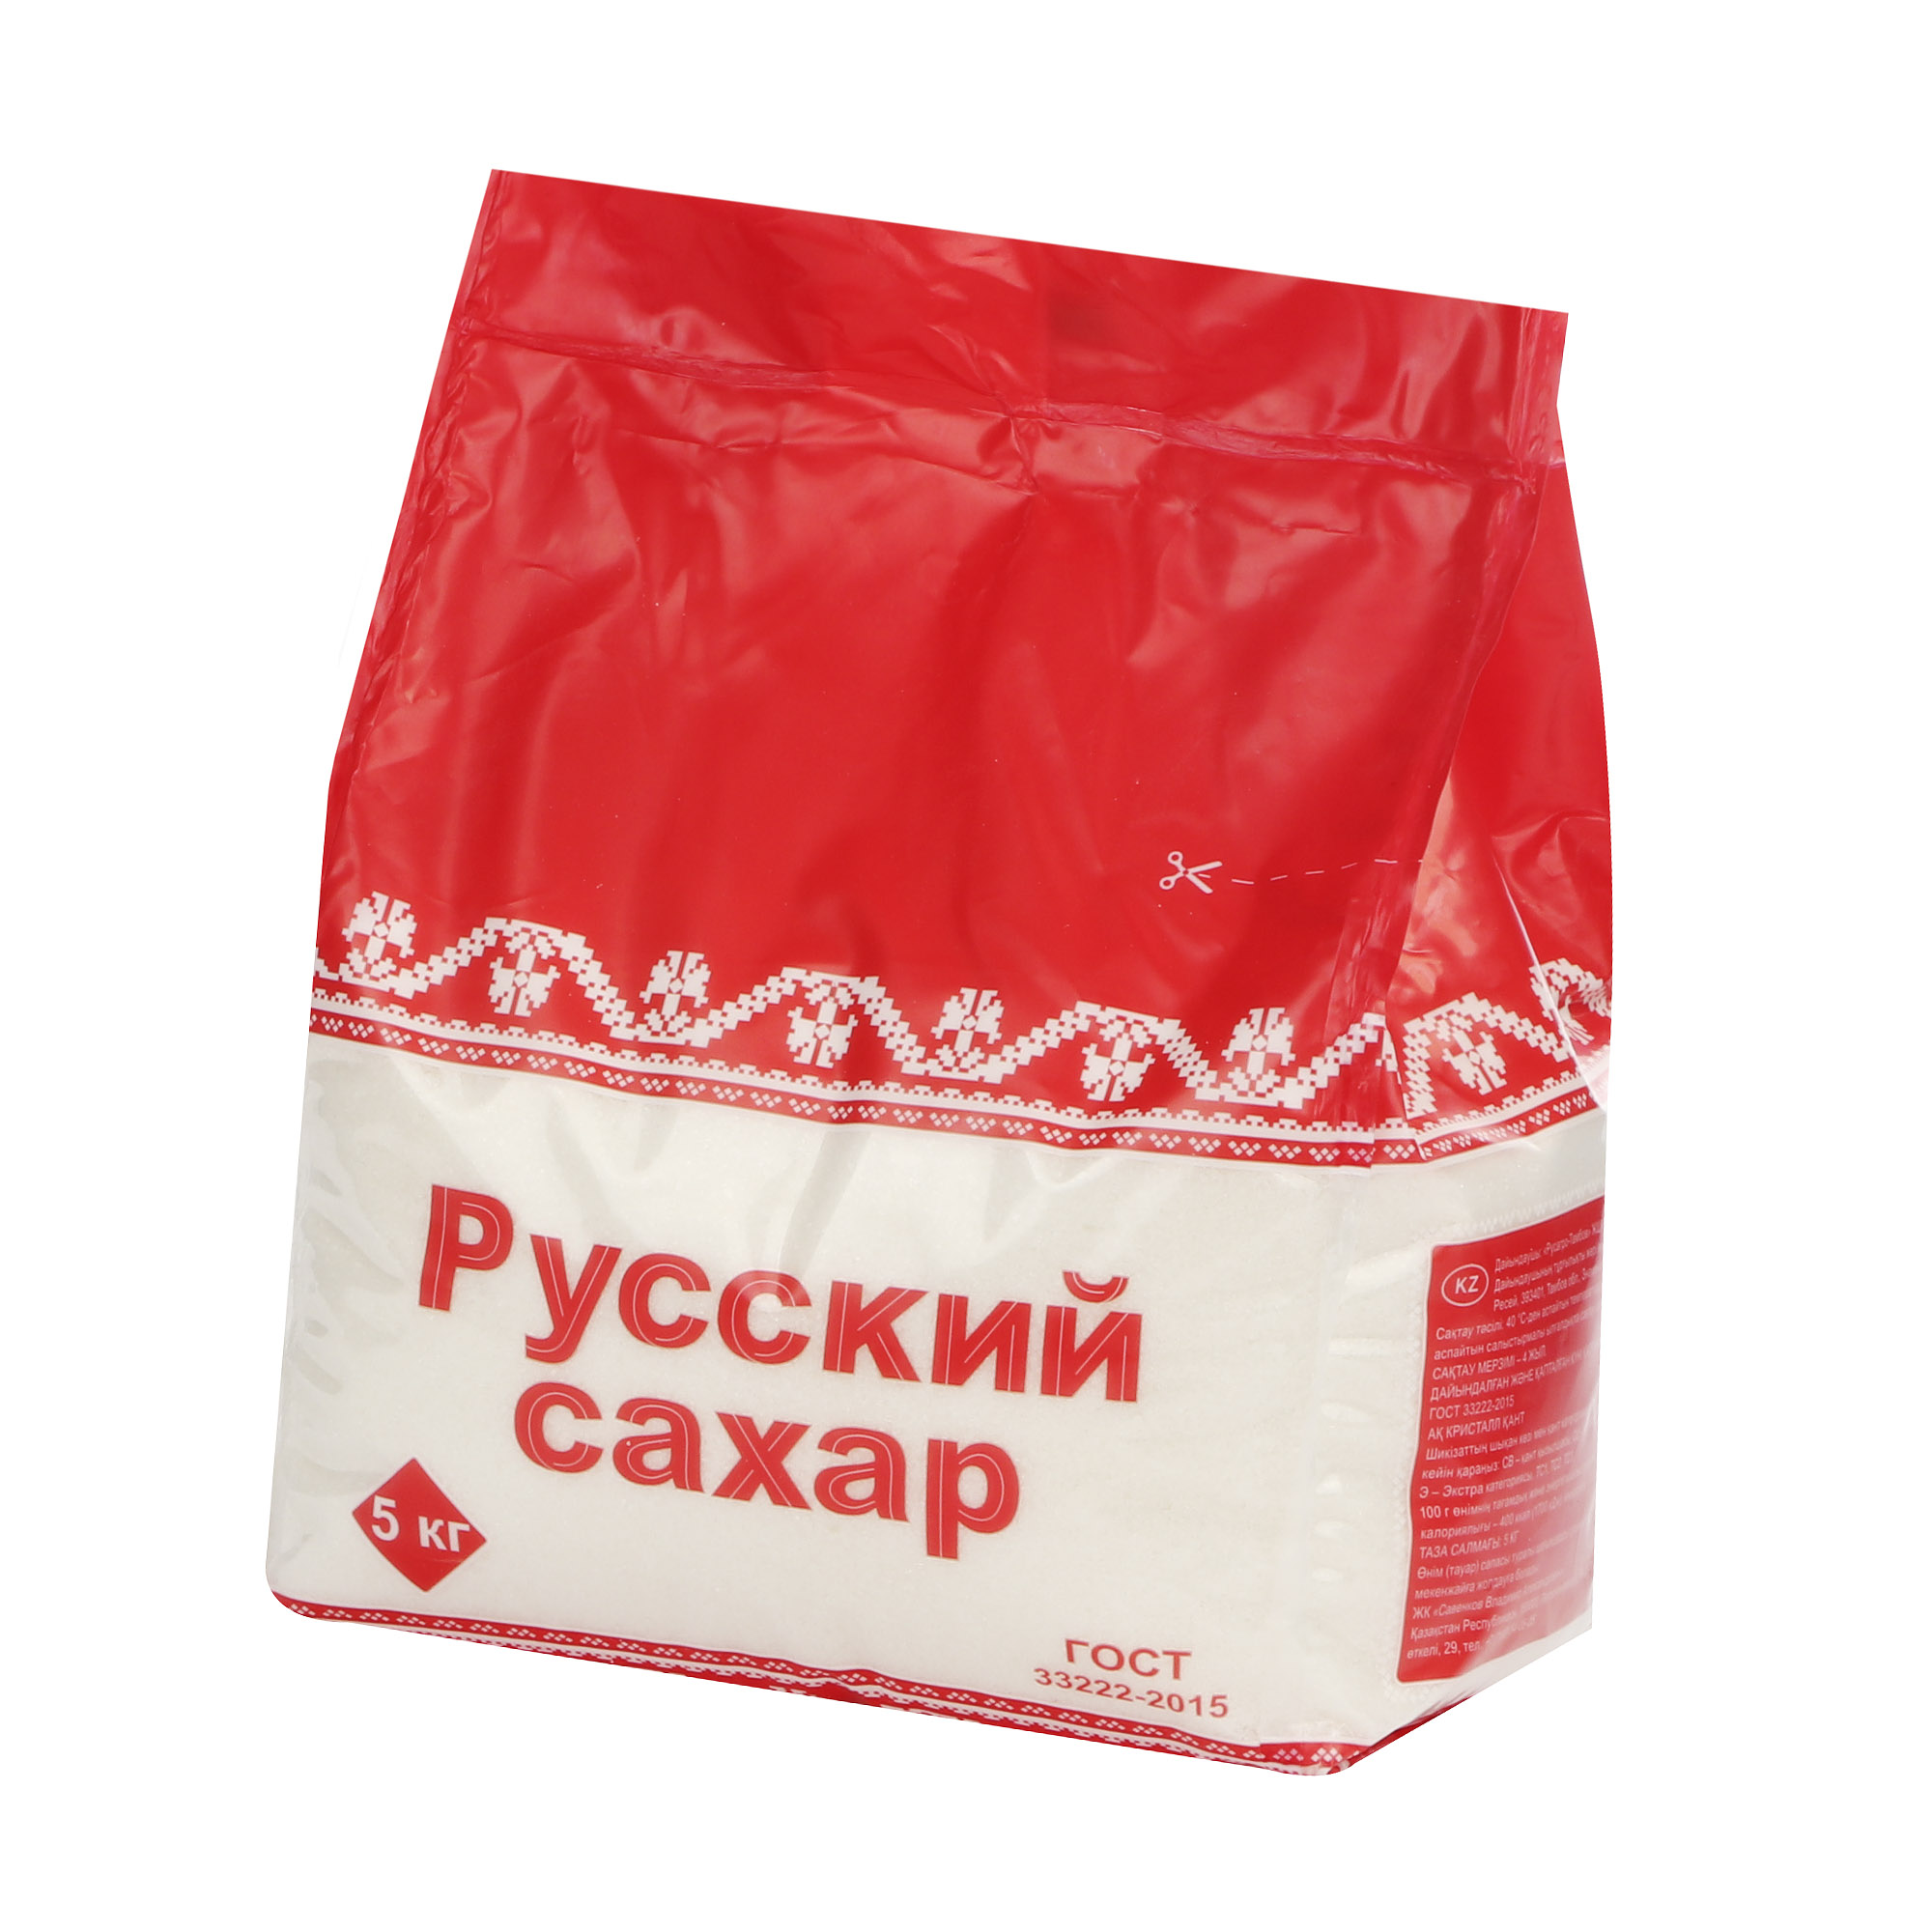 Сахар-песок Русский сахар 5 кг